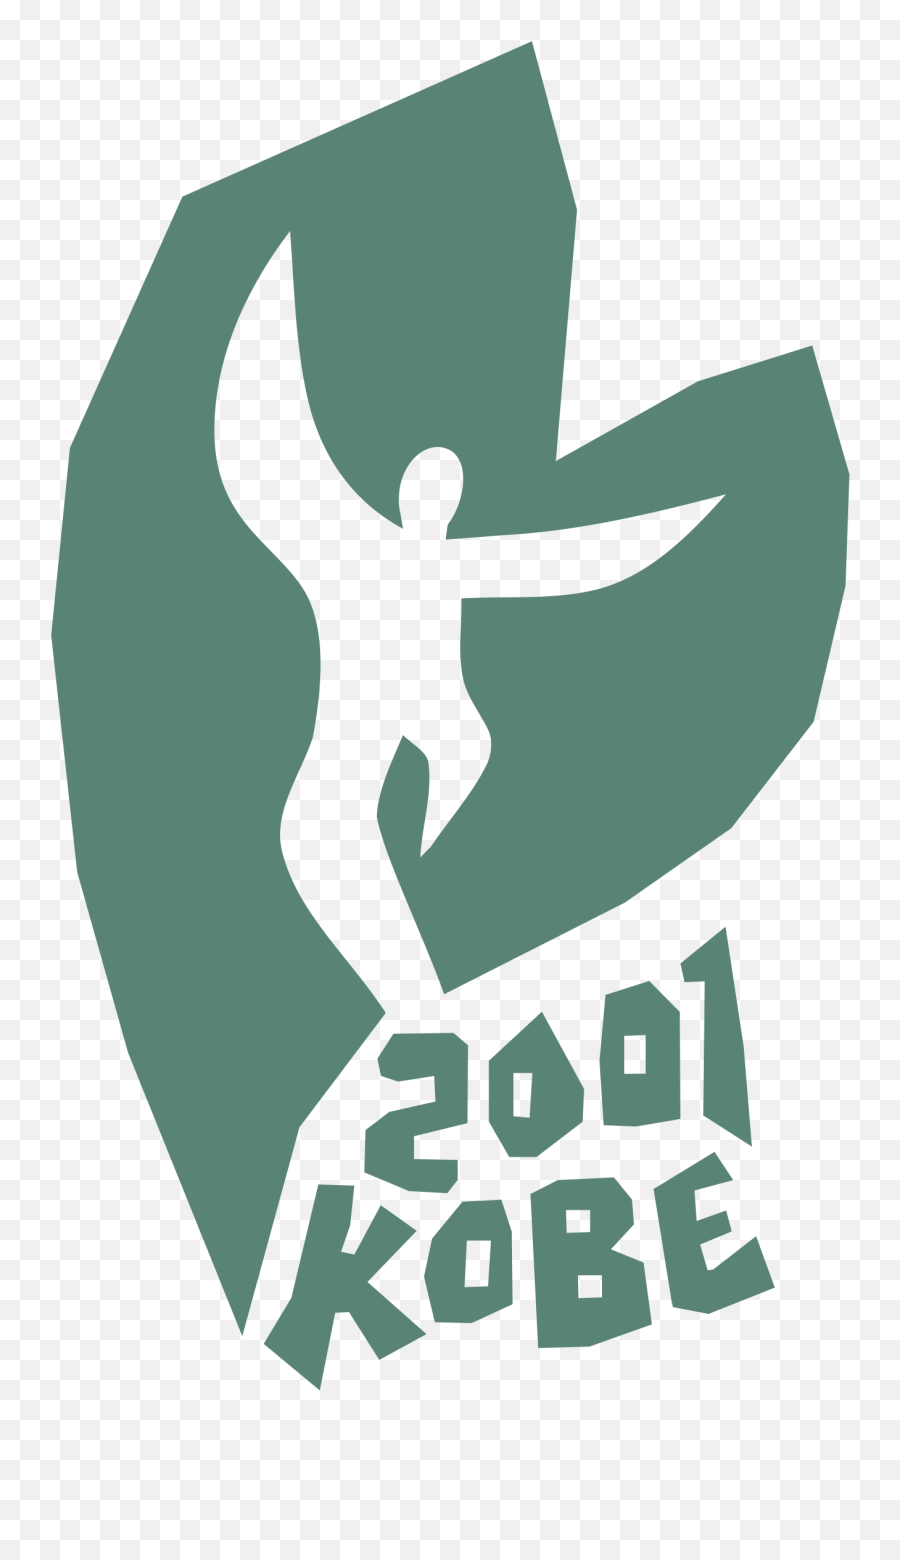 2001 Kobe Logo Png Transparent U0026 Svg Vector - Freebie Supply Graphic Design,Kobe Png